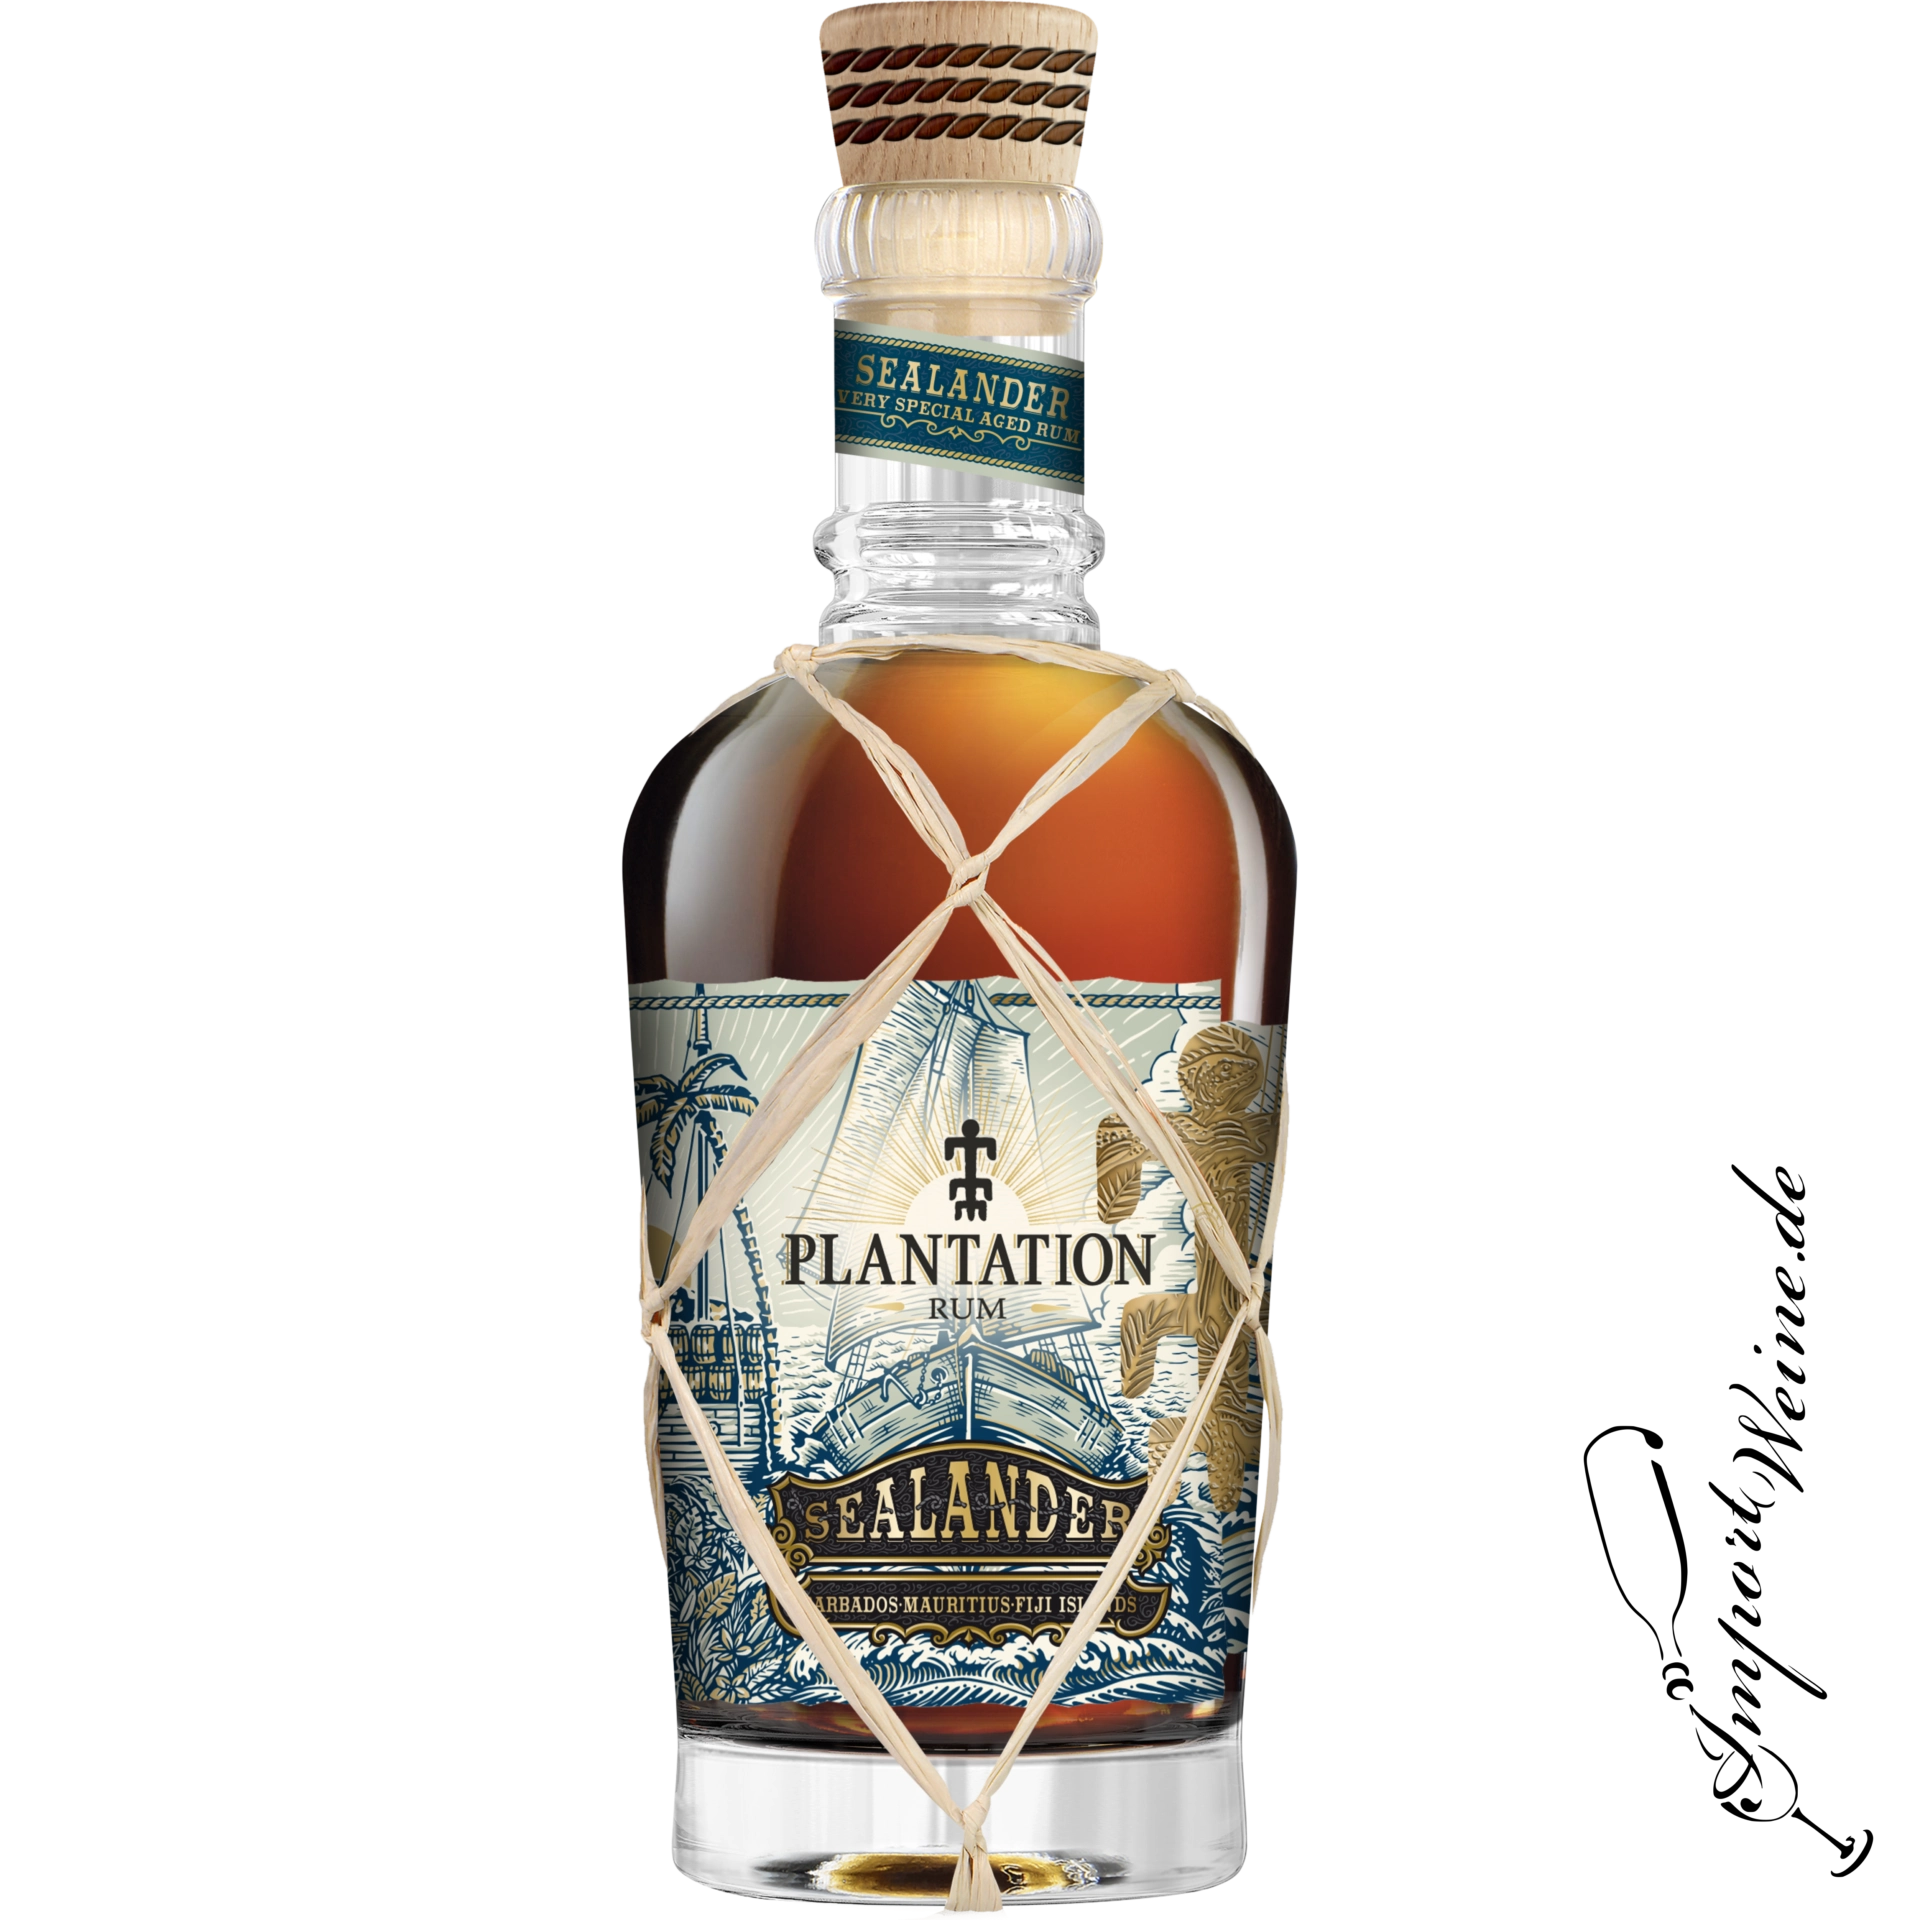 Plantation Rum Sealander Barbados-Mauritius-Fiji Islands-Rum 40% 0.70l